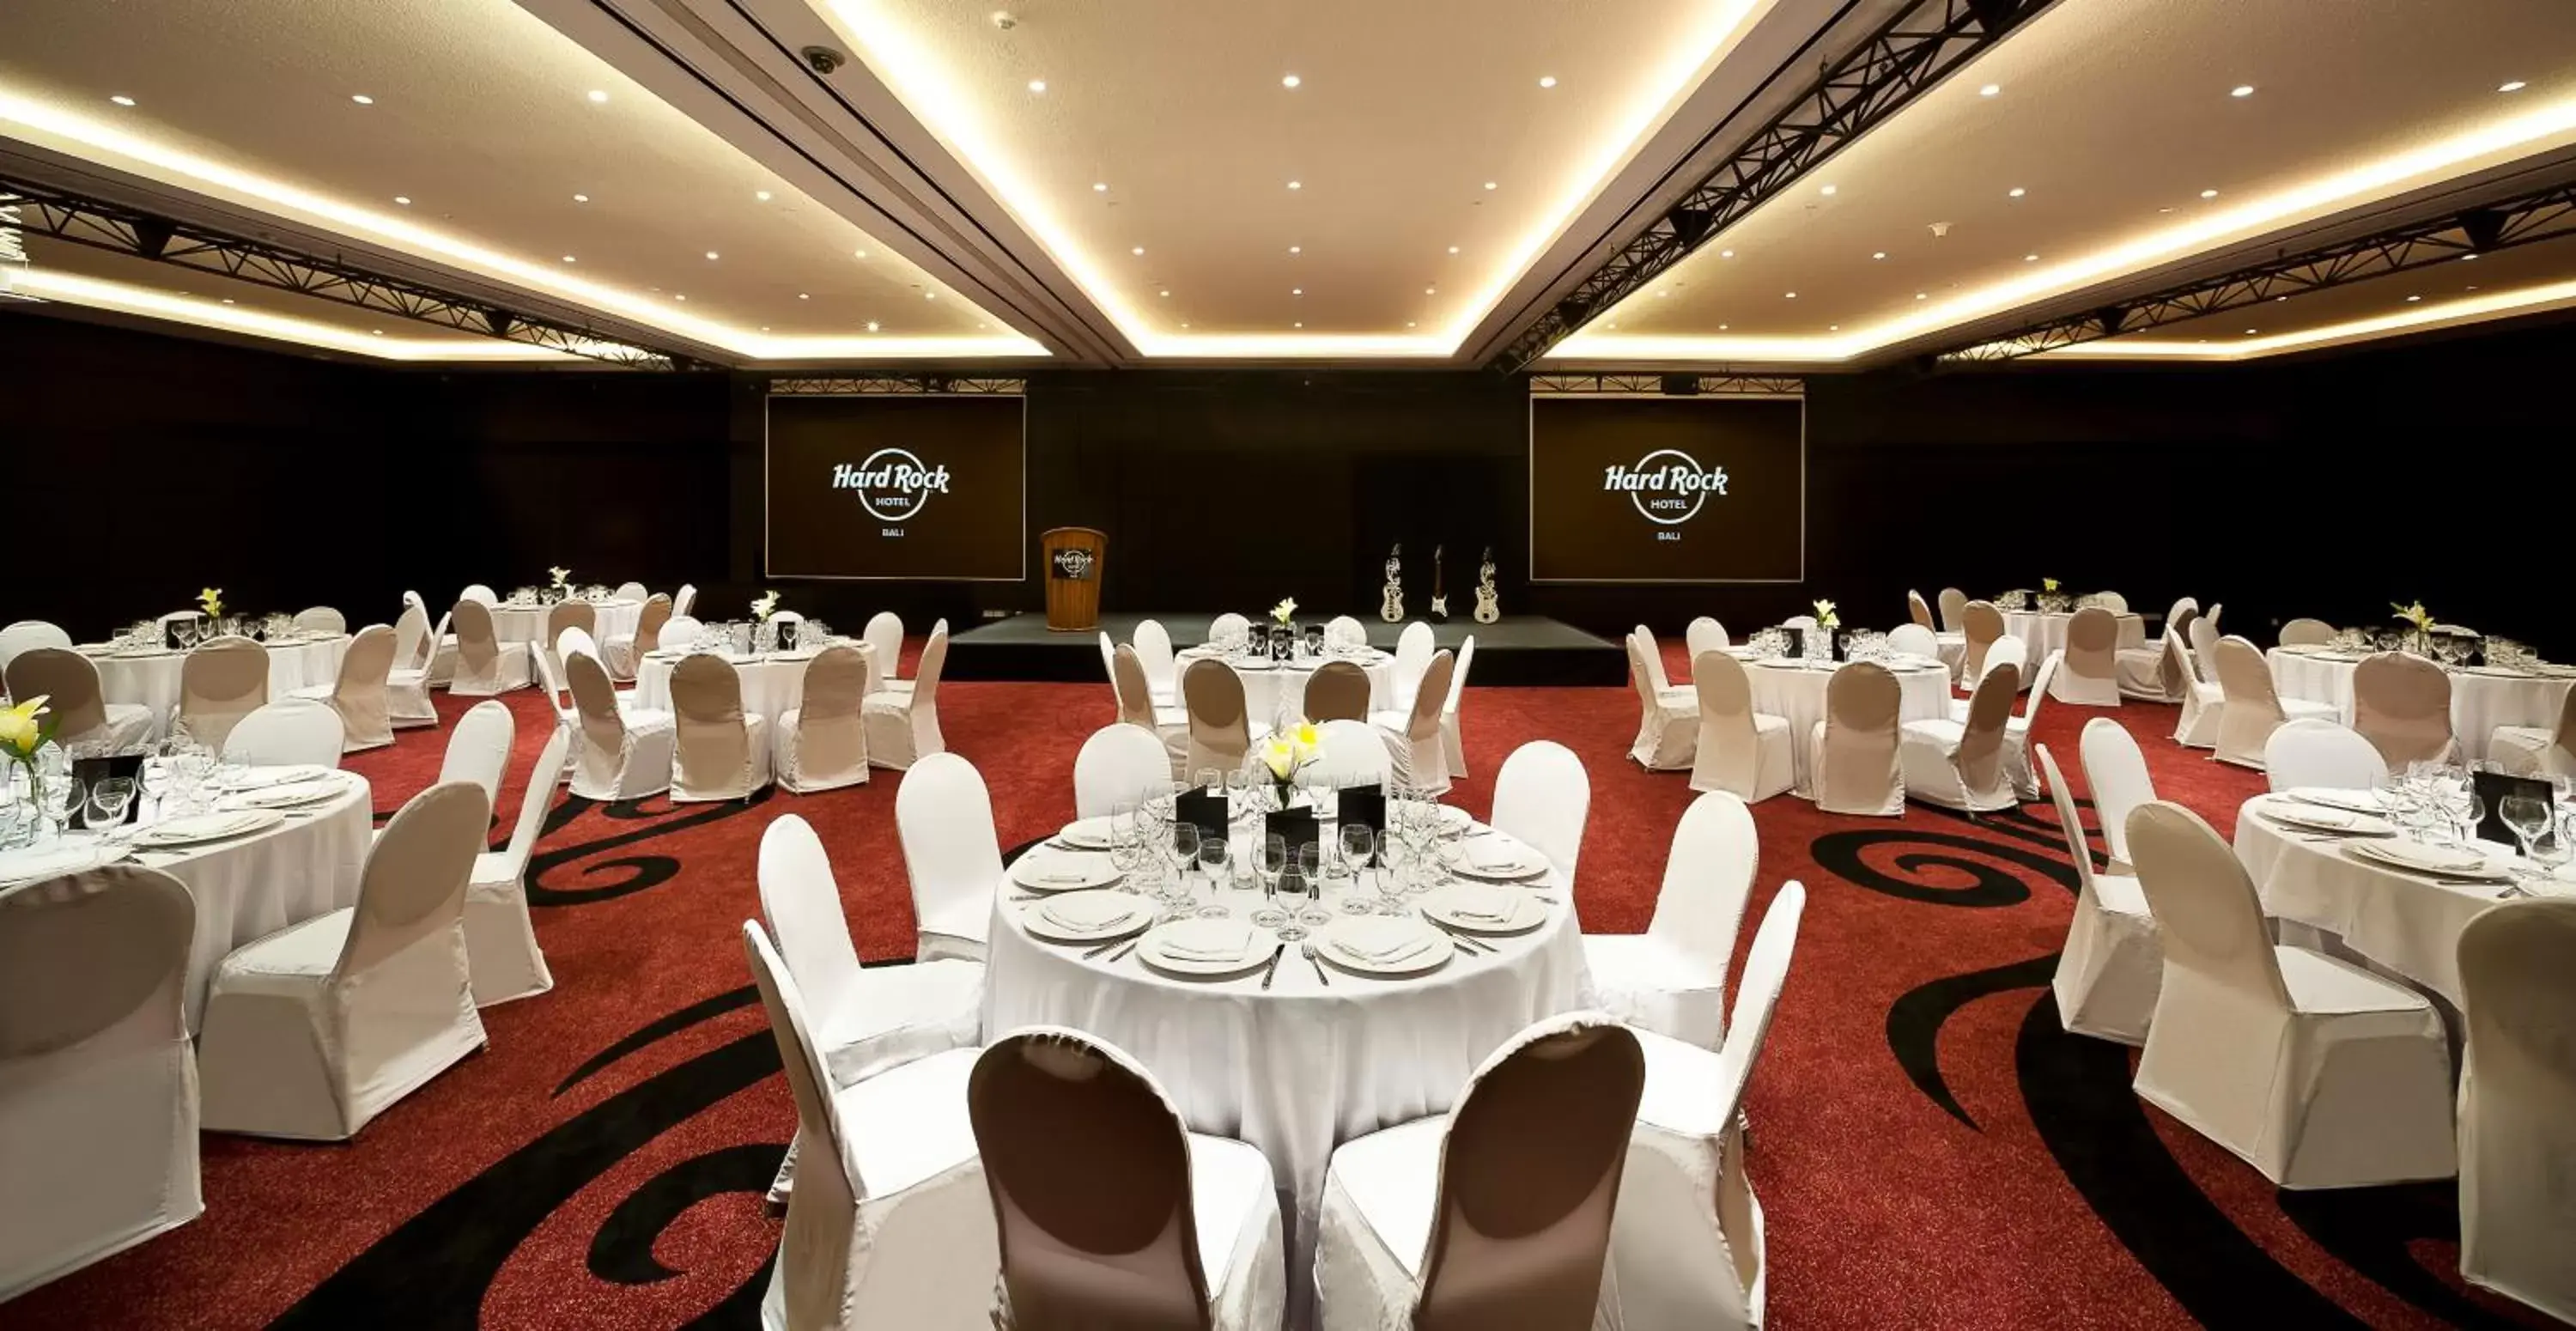 Banquet/Function facilities, Banquet Facilities in Hard Rock Hotel Bali